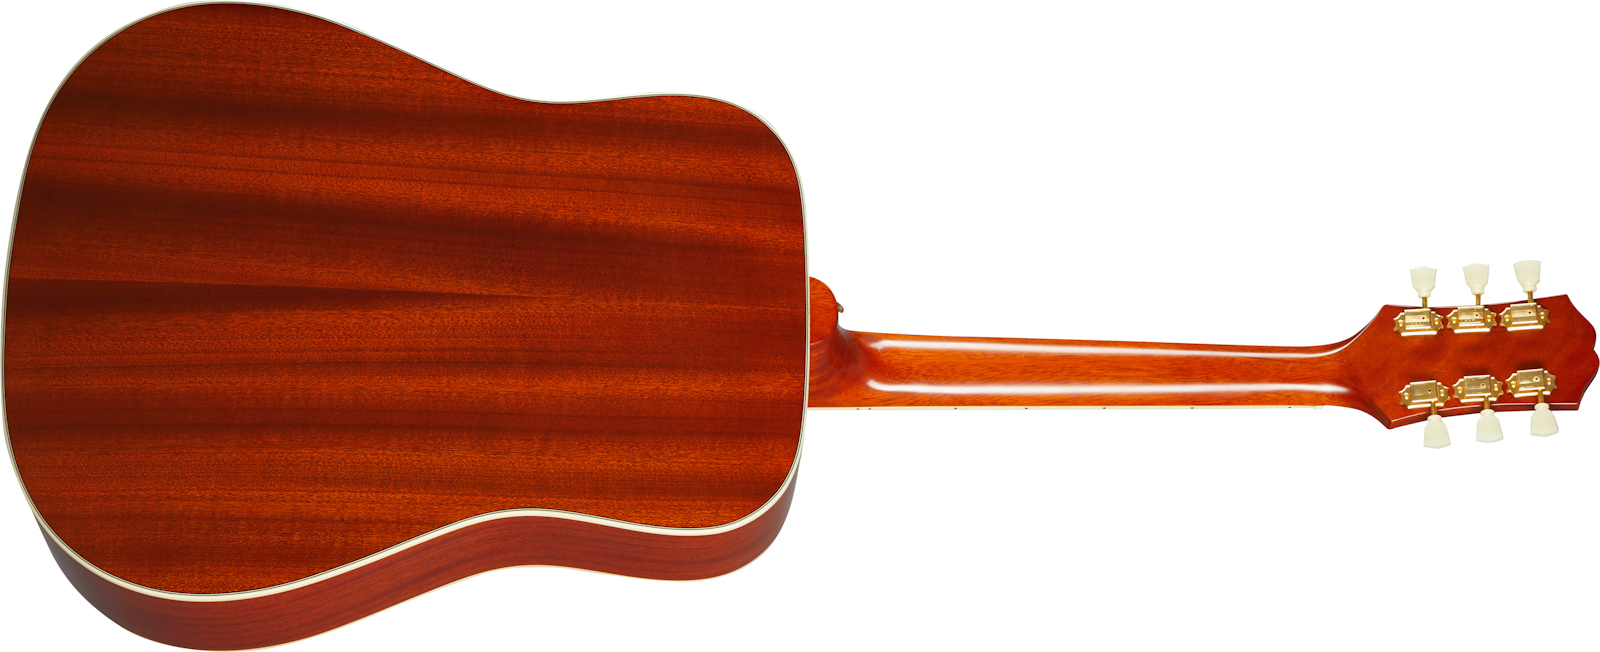 Epiphone Hummingbird Inspired By Gibson Dreadnought Epicea Acajou Lau - Aged Cherry Sunburst - Electro acoustic guitar - Variation 1